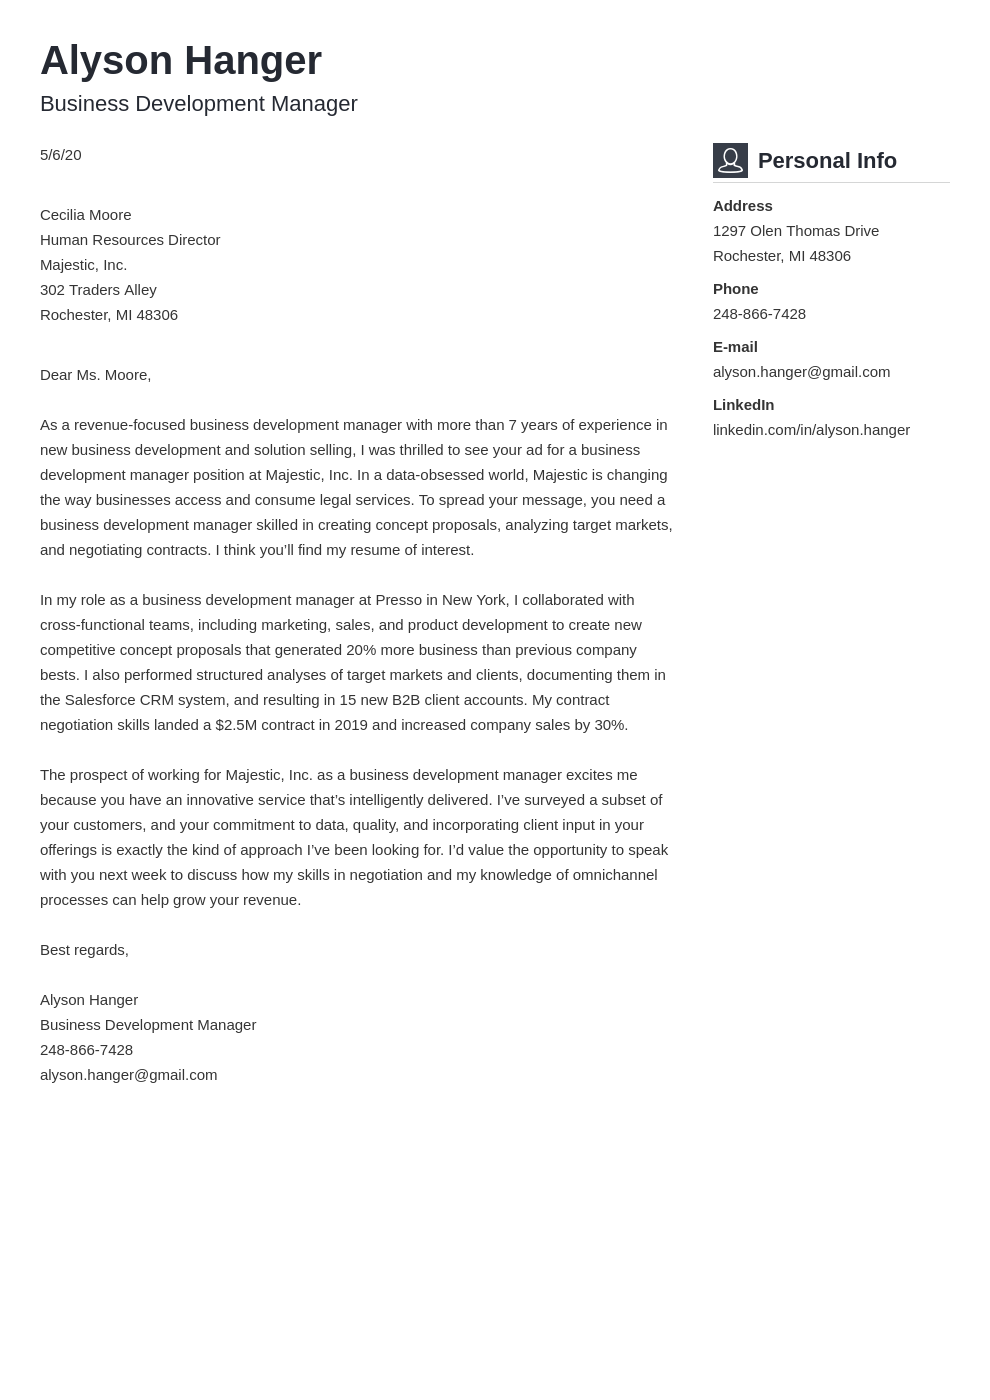 cover letter sample for business development manager position